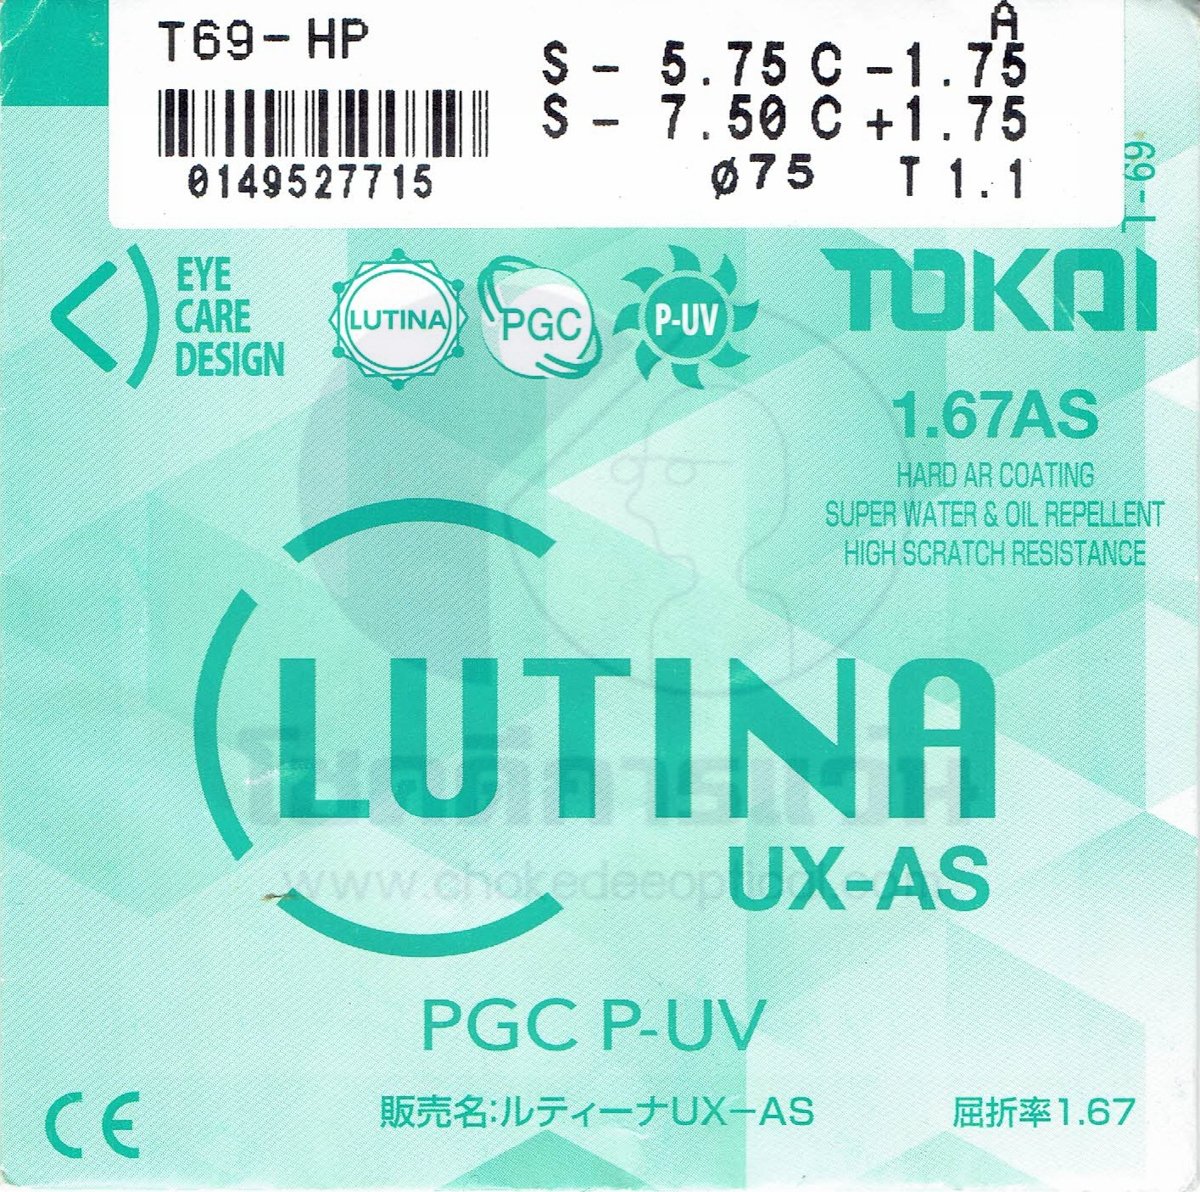 Tokai Lutina (ถ่ายรูปแล้วแสงไม่สะท้อน)